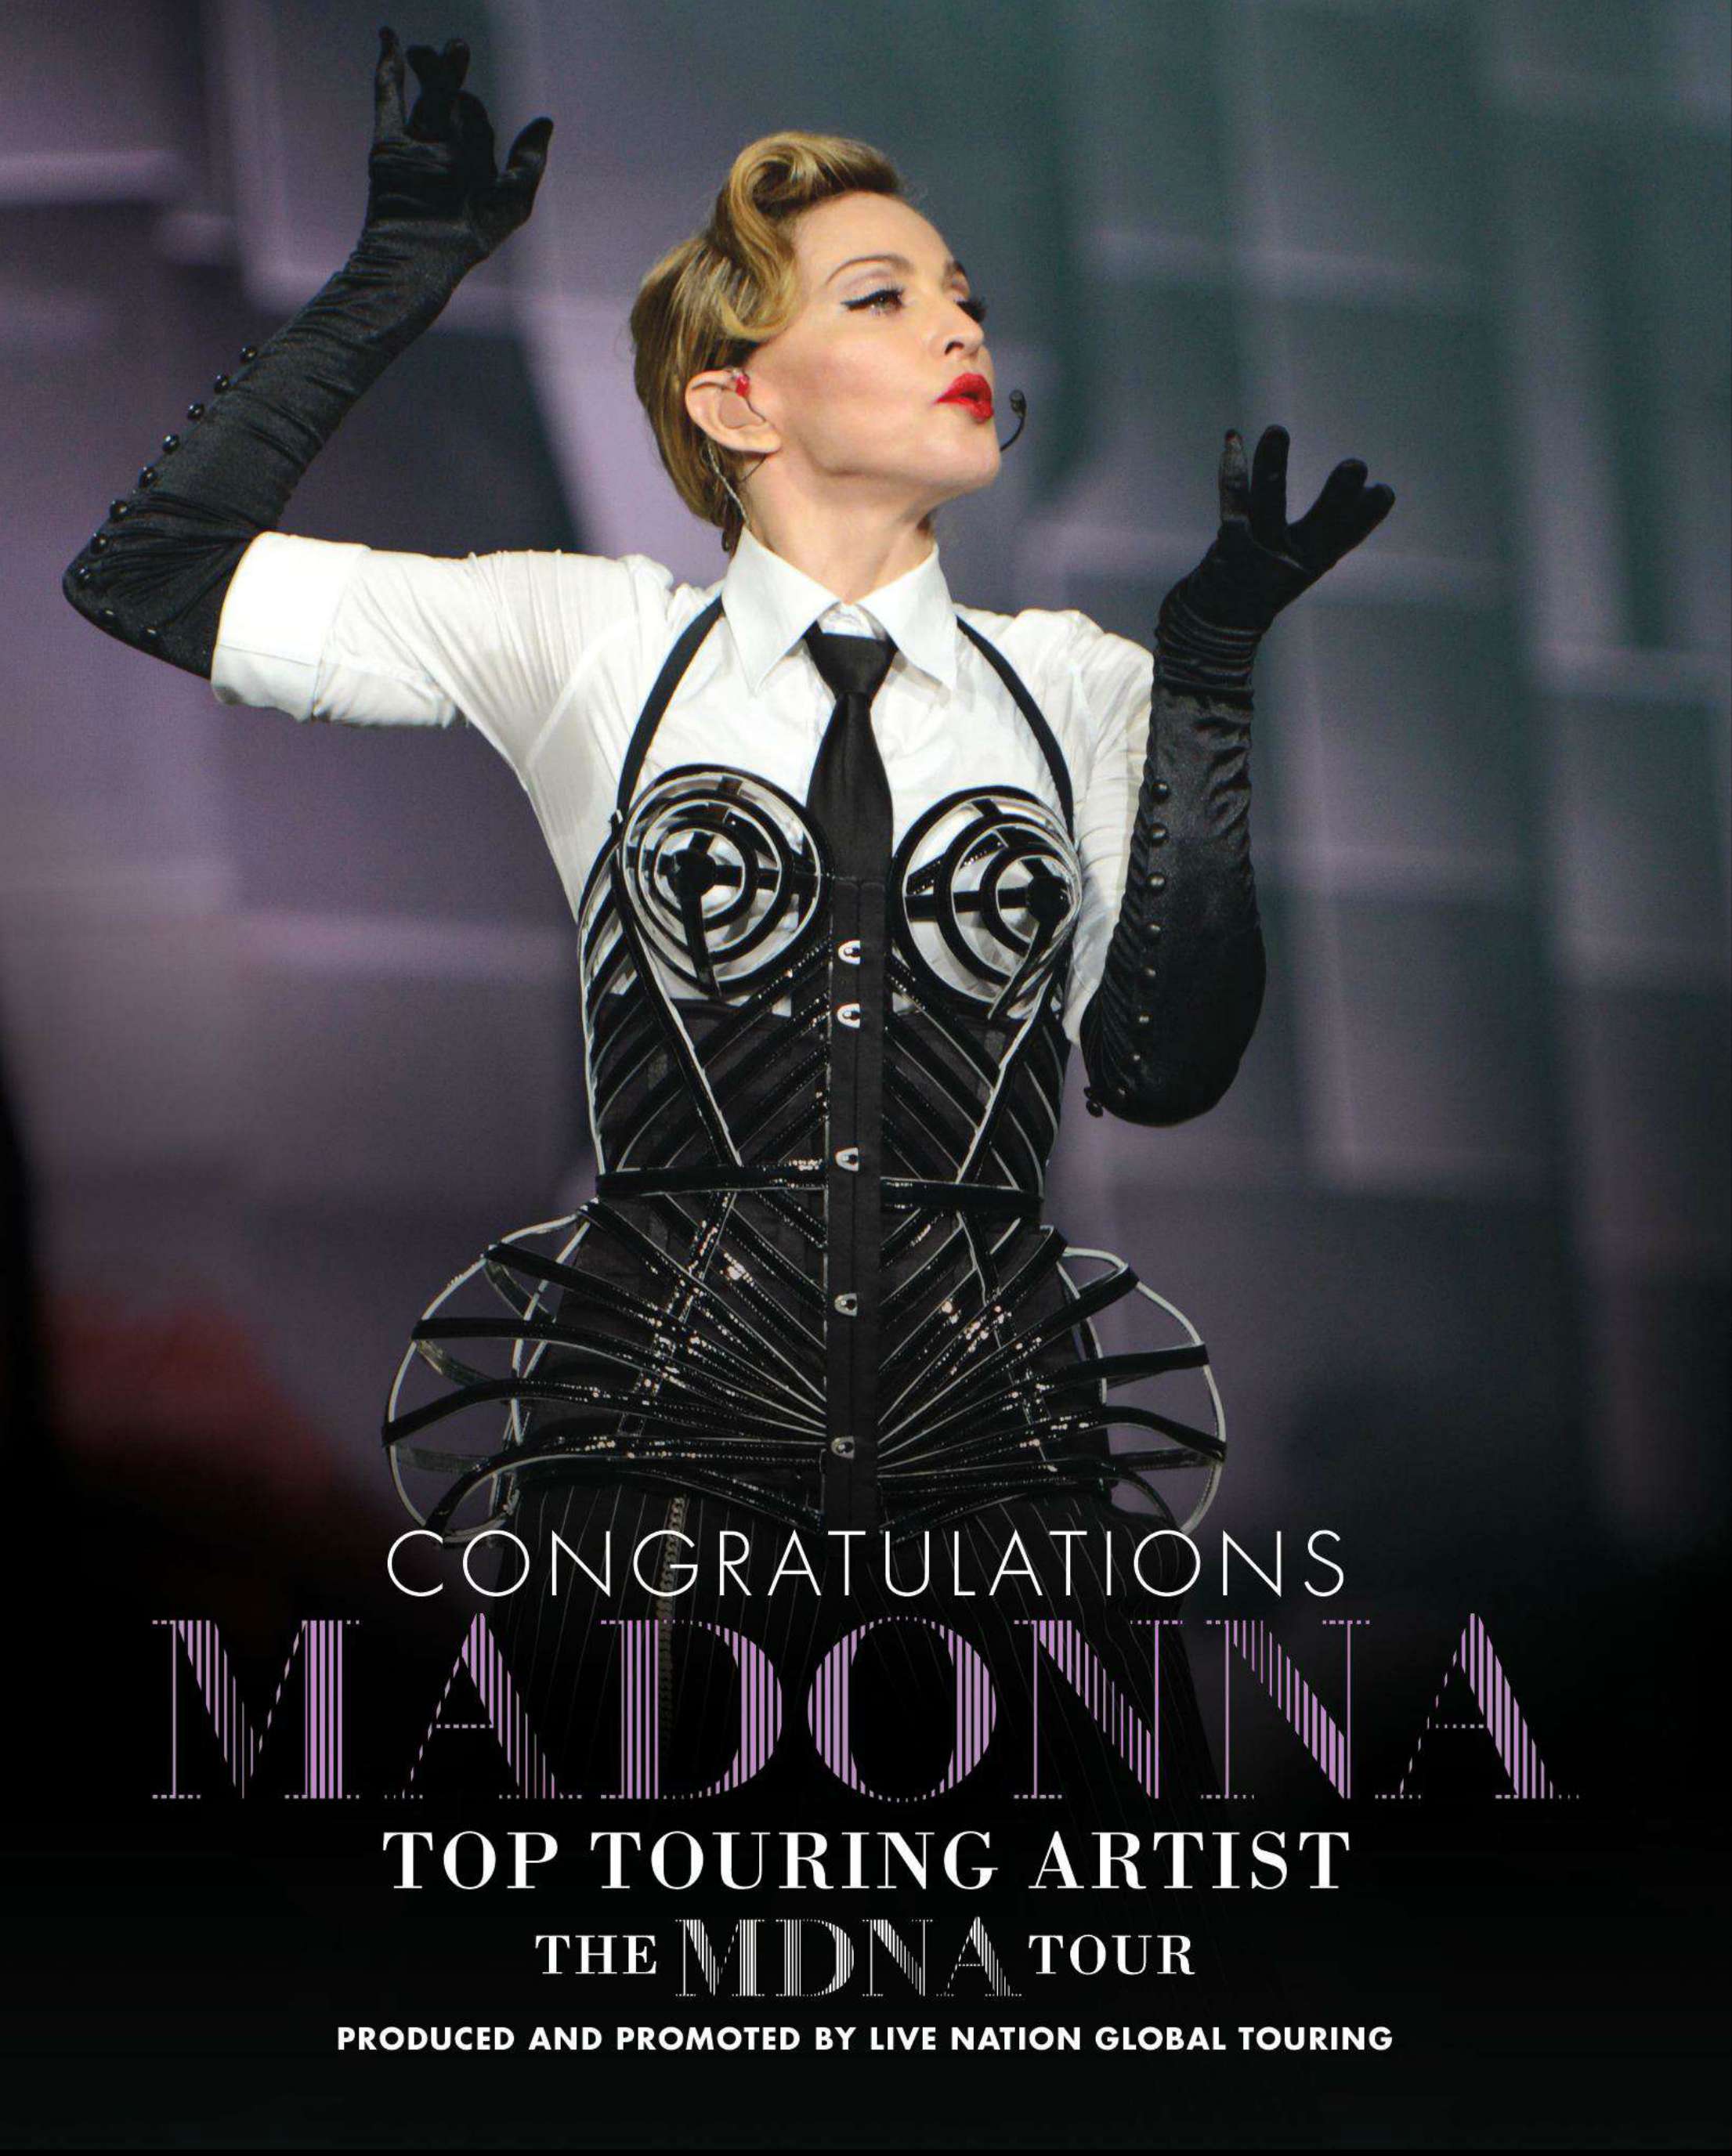 Billboard Magazine Congratulates Madonna on her "Top Touring Artist